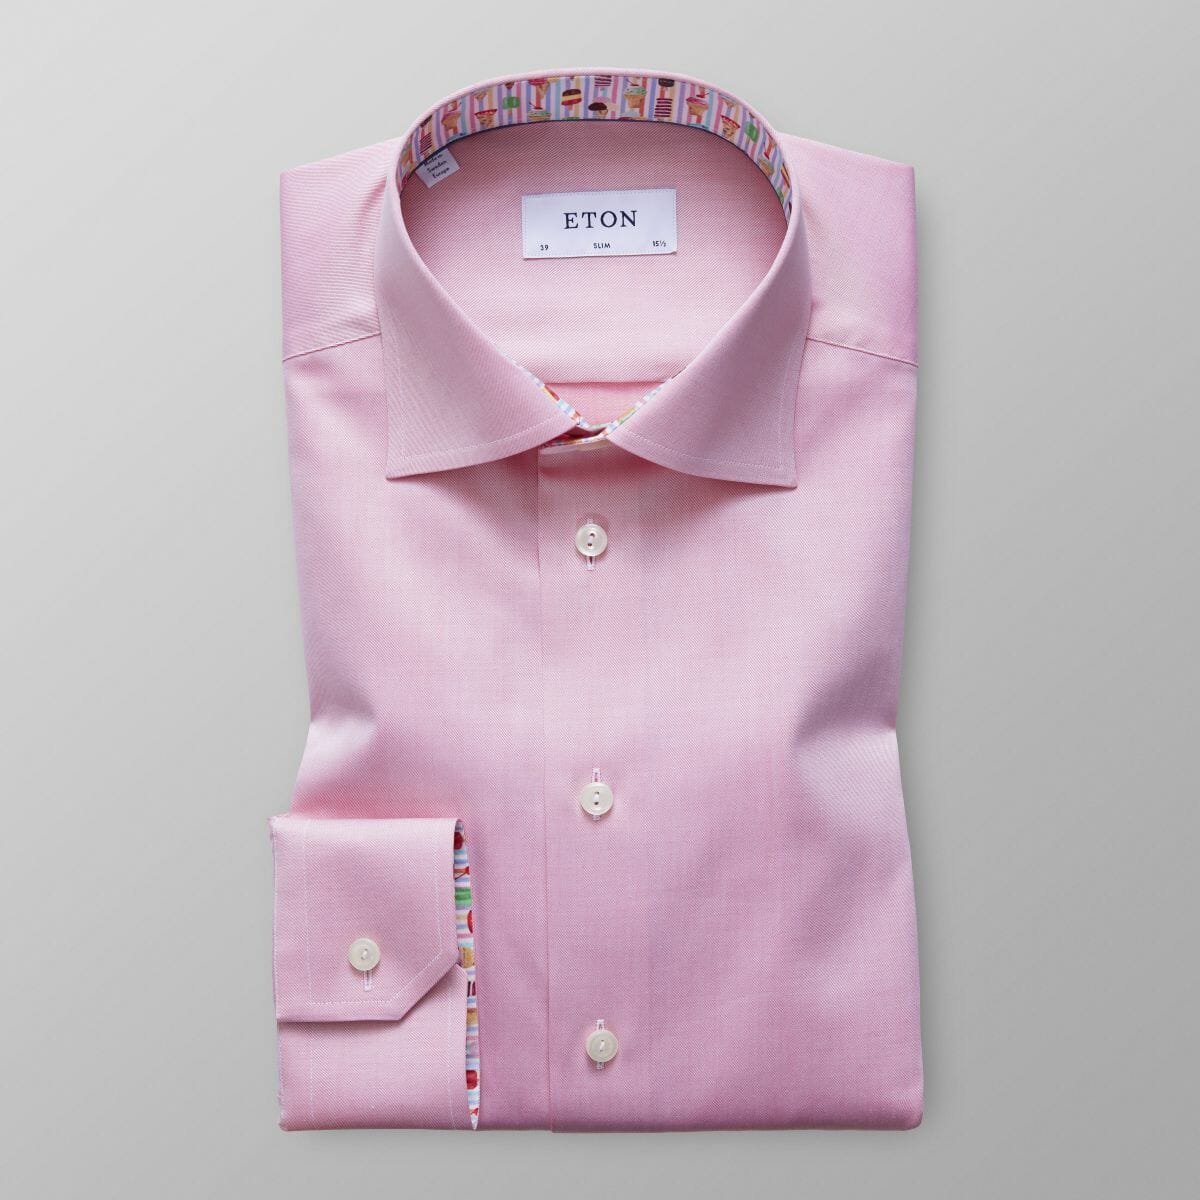 Eton Dress Shirts: Are They Worth It? – Men’s Luxury Dress Shirt Review